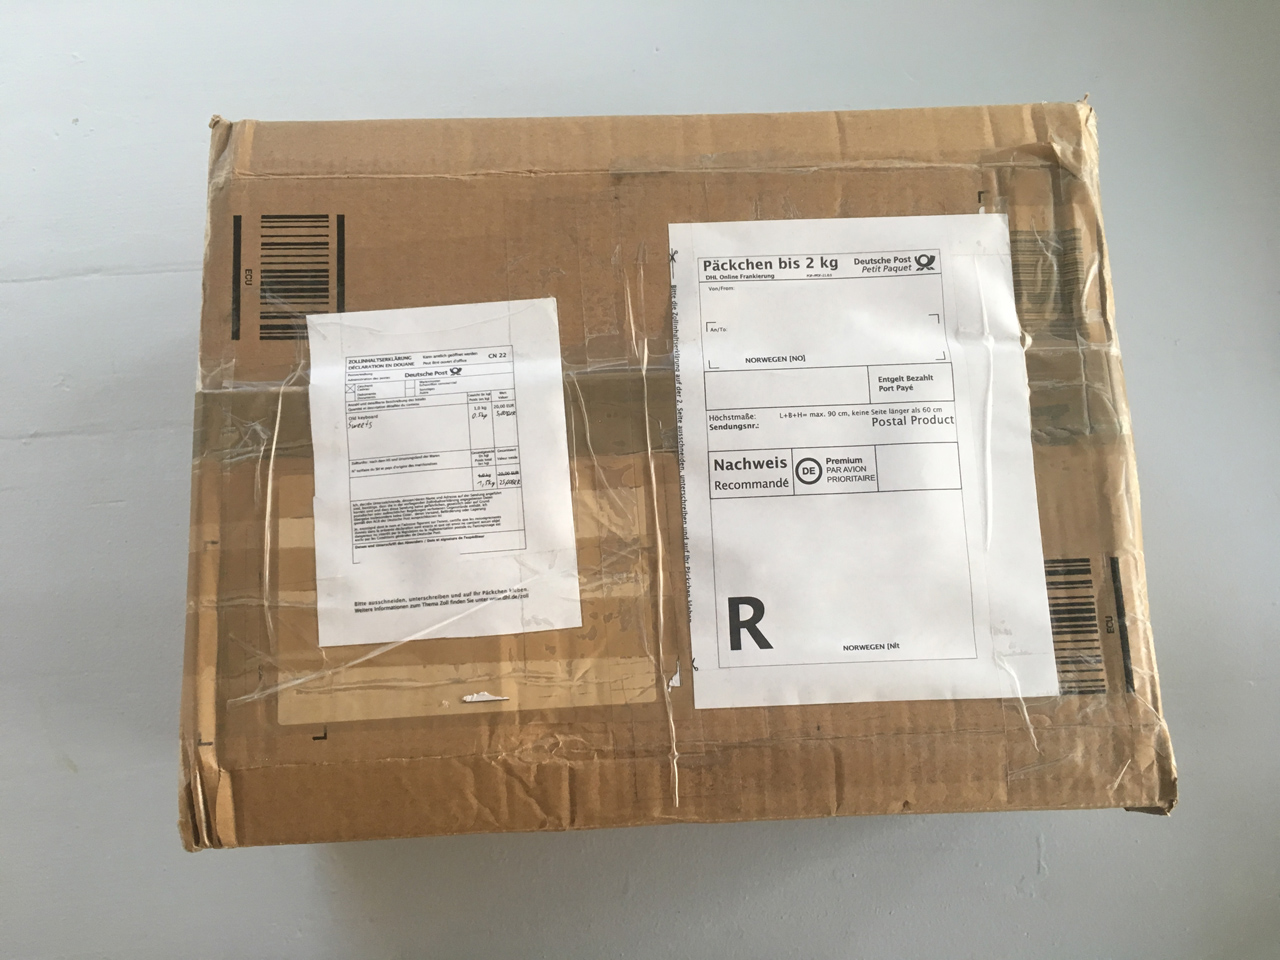 Big secret box from Germany!